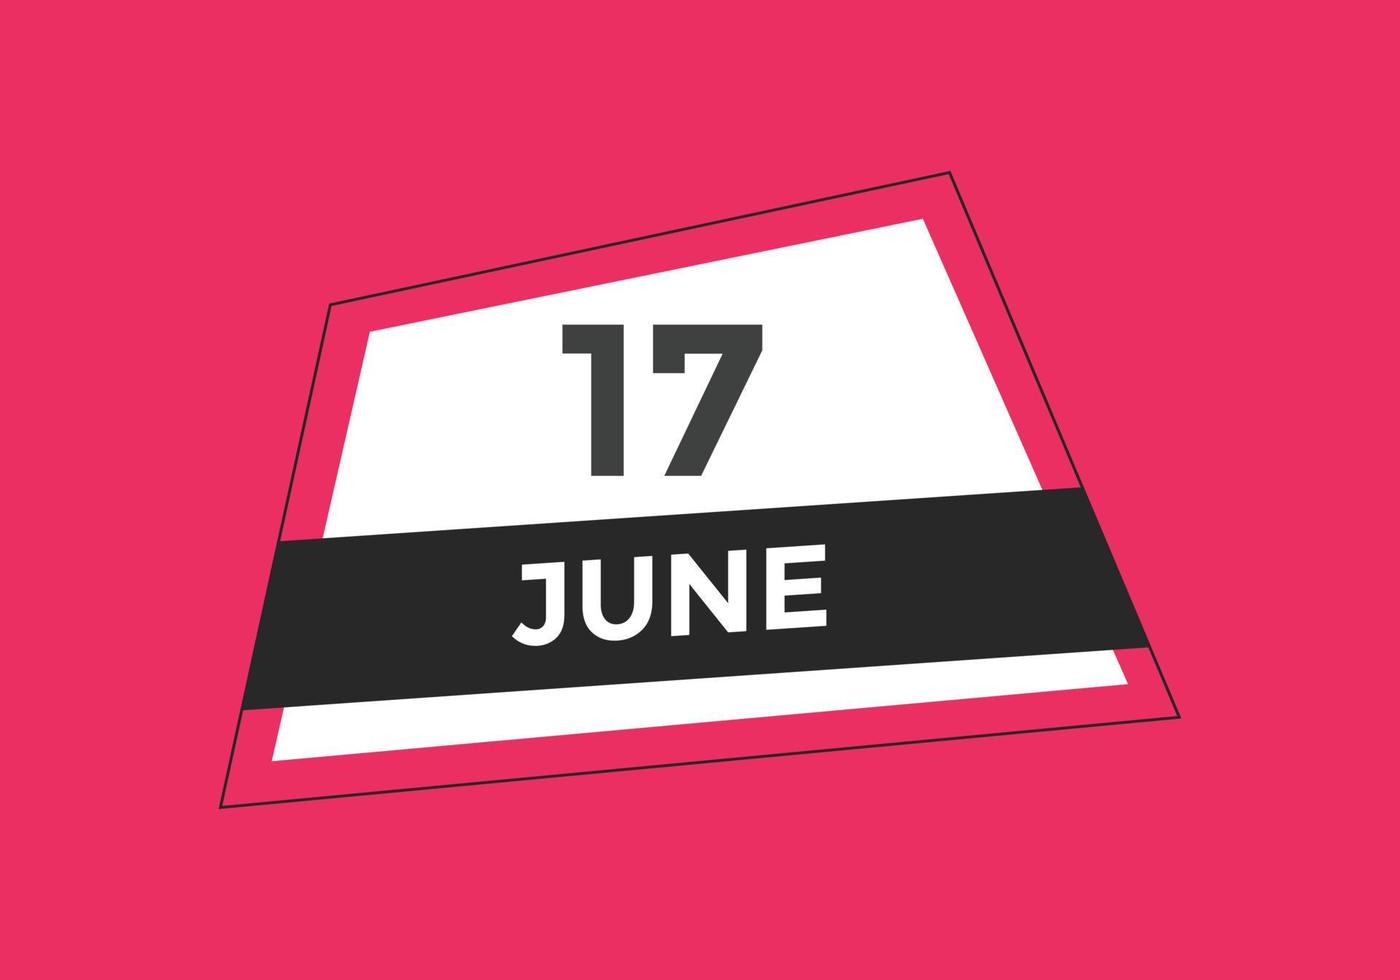 juni 17 kalender påminnelse. 17:e juni dagligen kalender ikon mall. kalender 17:e juni ikon design mall. vektor illustration